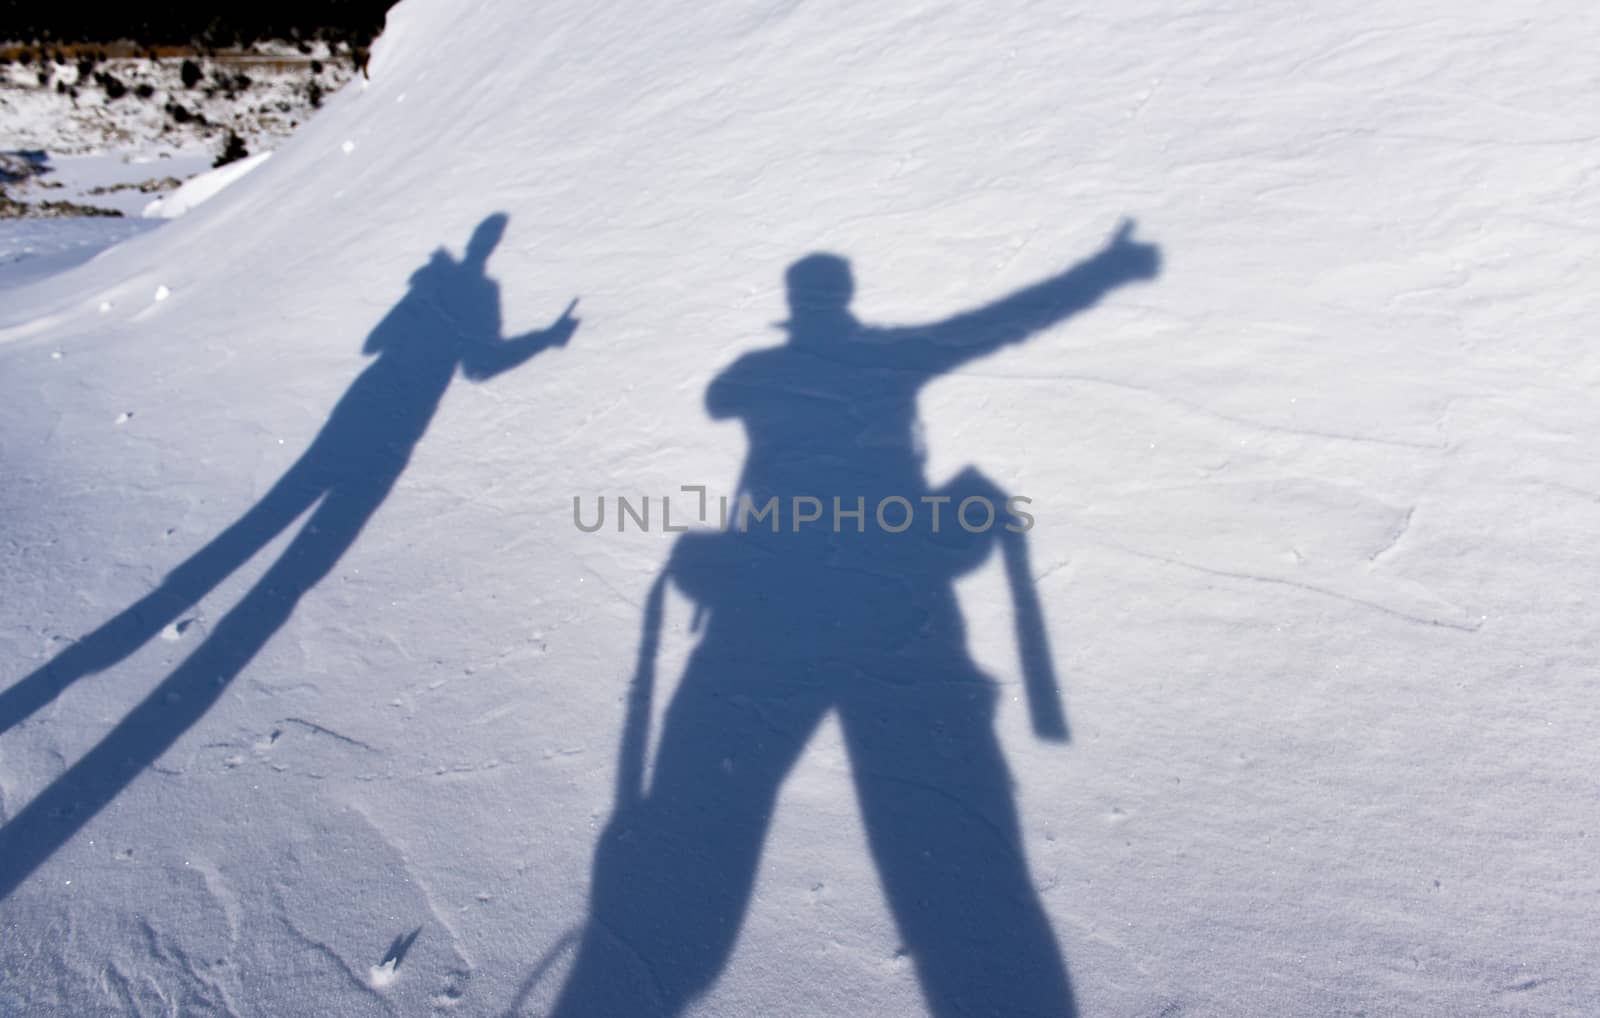 shadows of adventurous climbers by crazymedia007